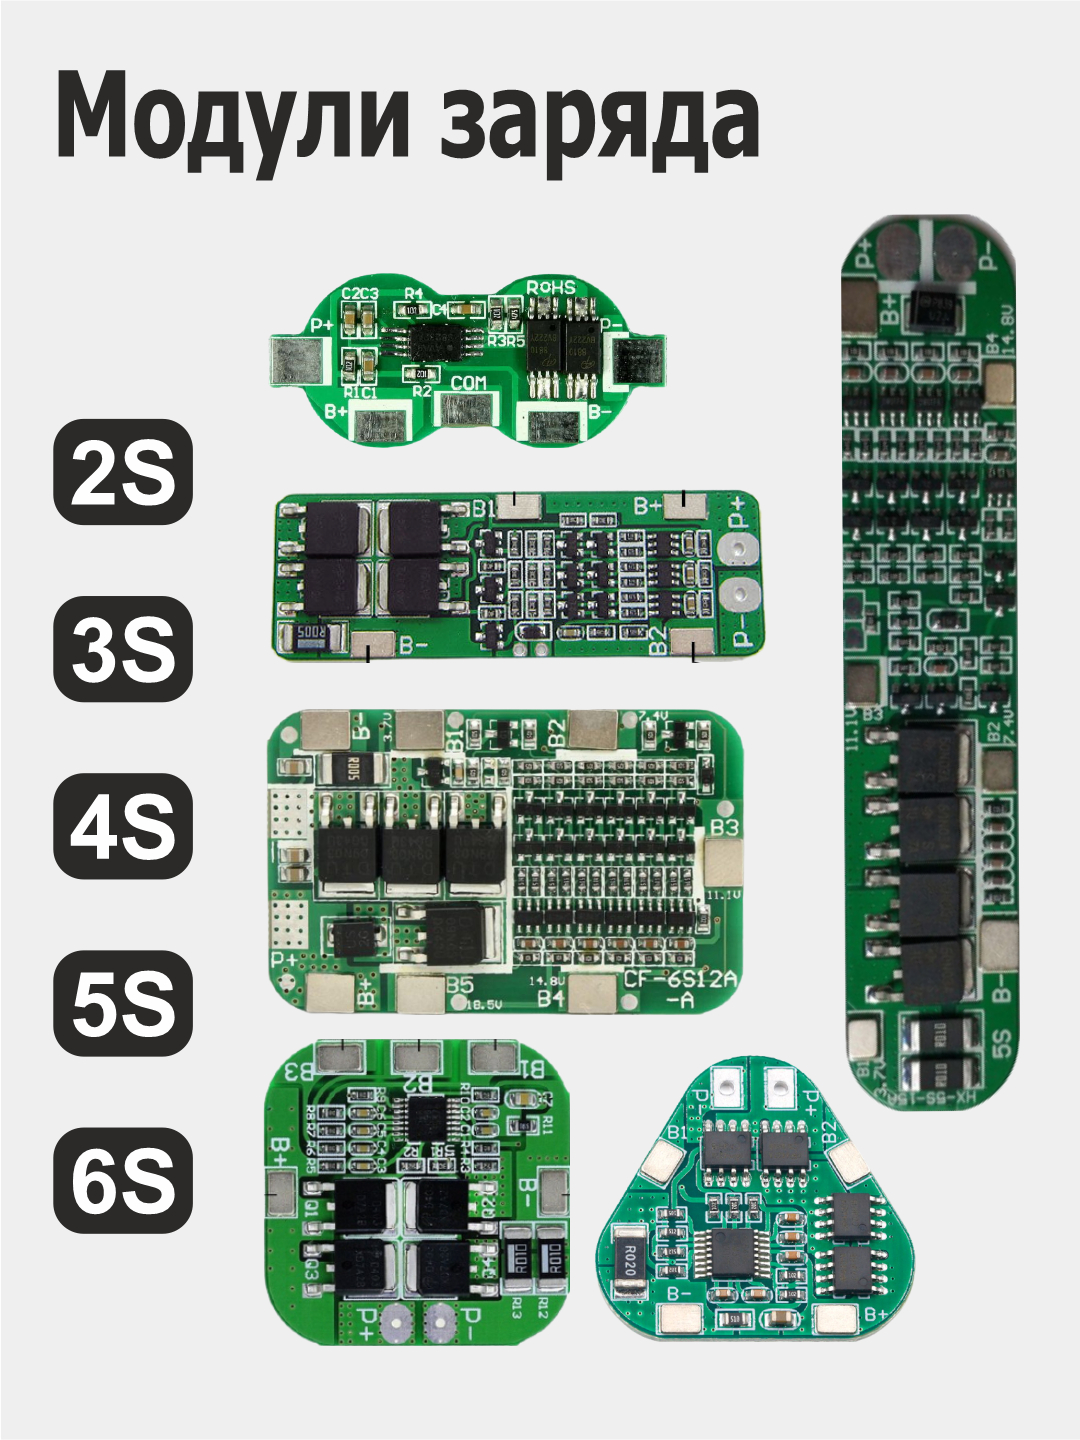 Зарядные устройства для аккумуляторов АА, ААА, С (R14), D (R20), Крона, Ni-Cd, Ni-MH, Li-Ion.